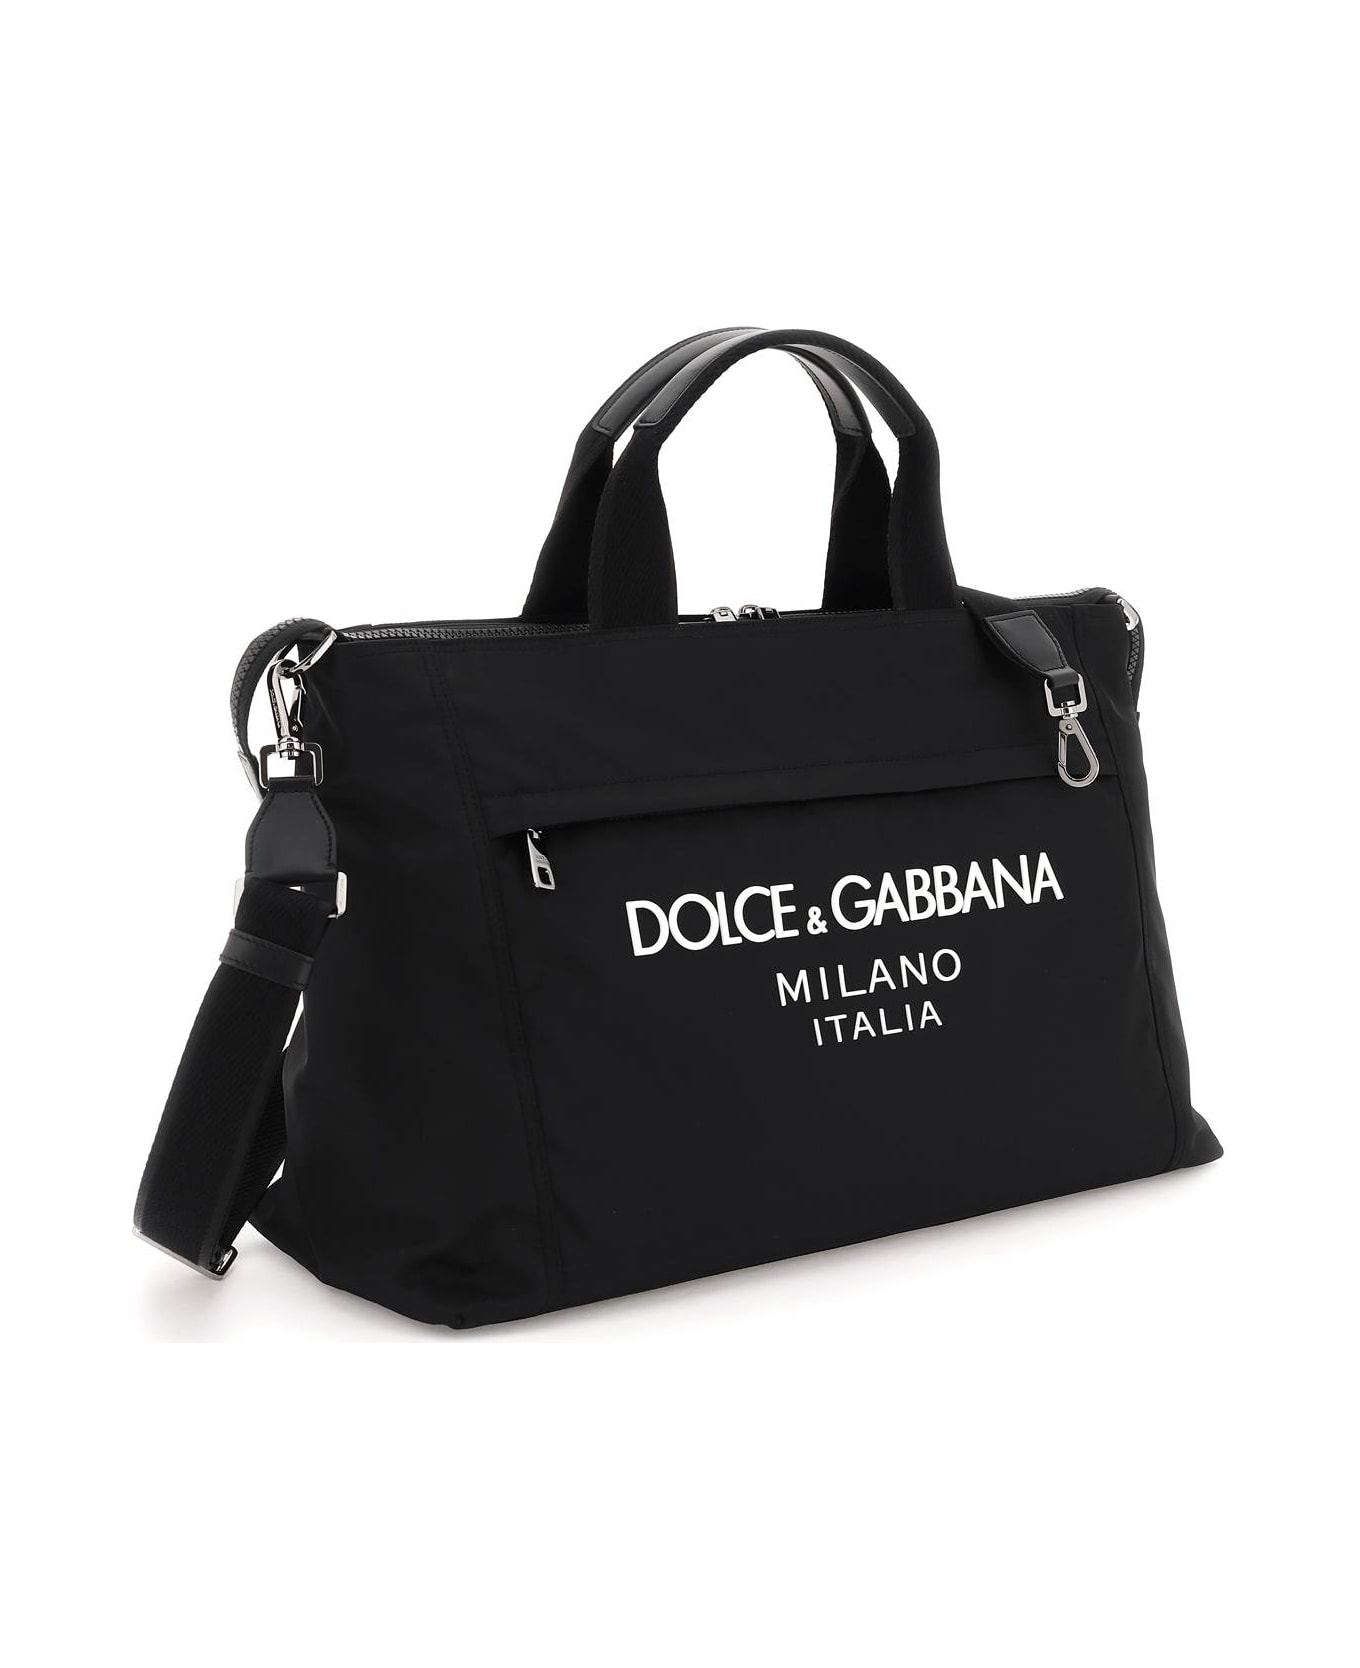 Dolce & Gabbana Nylon Duffle Bag With Logo - Nero/nero